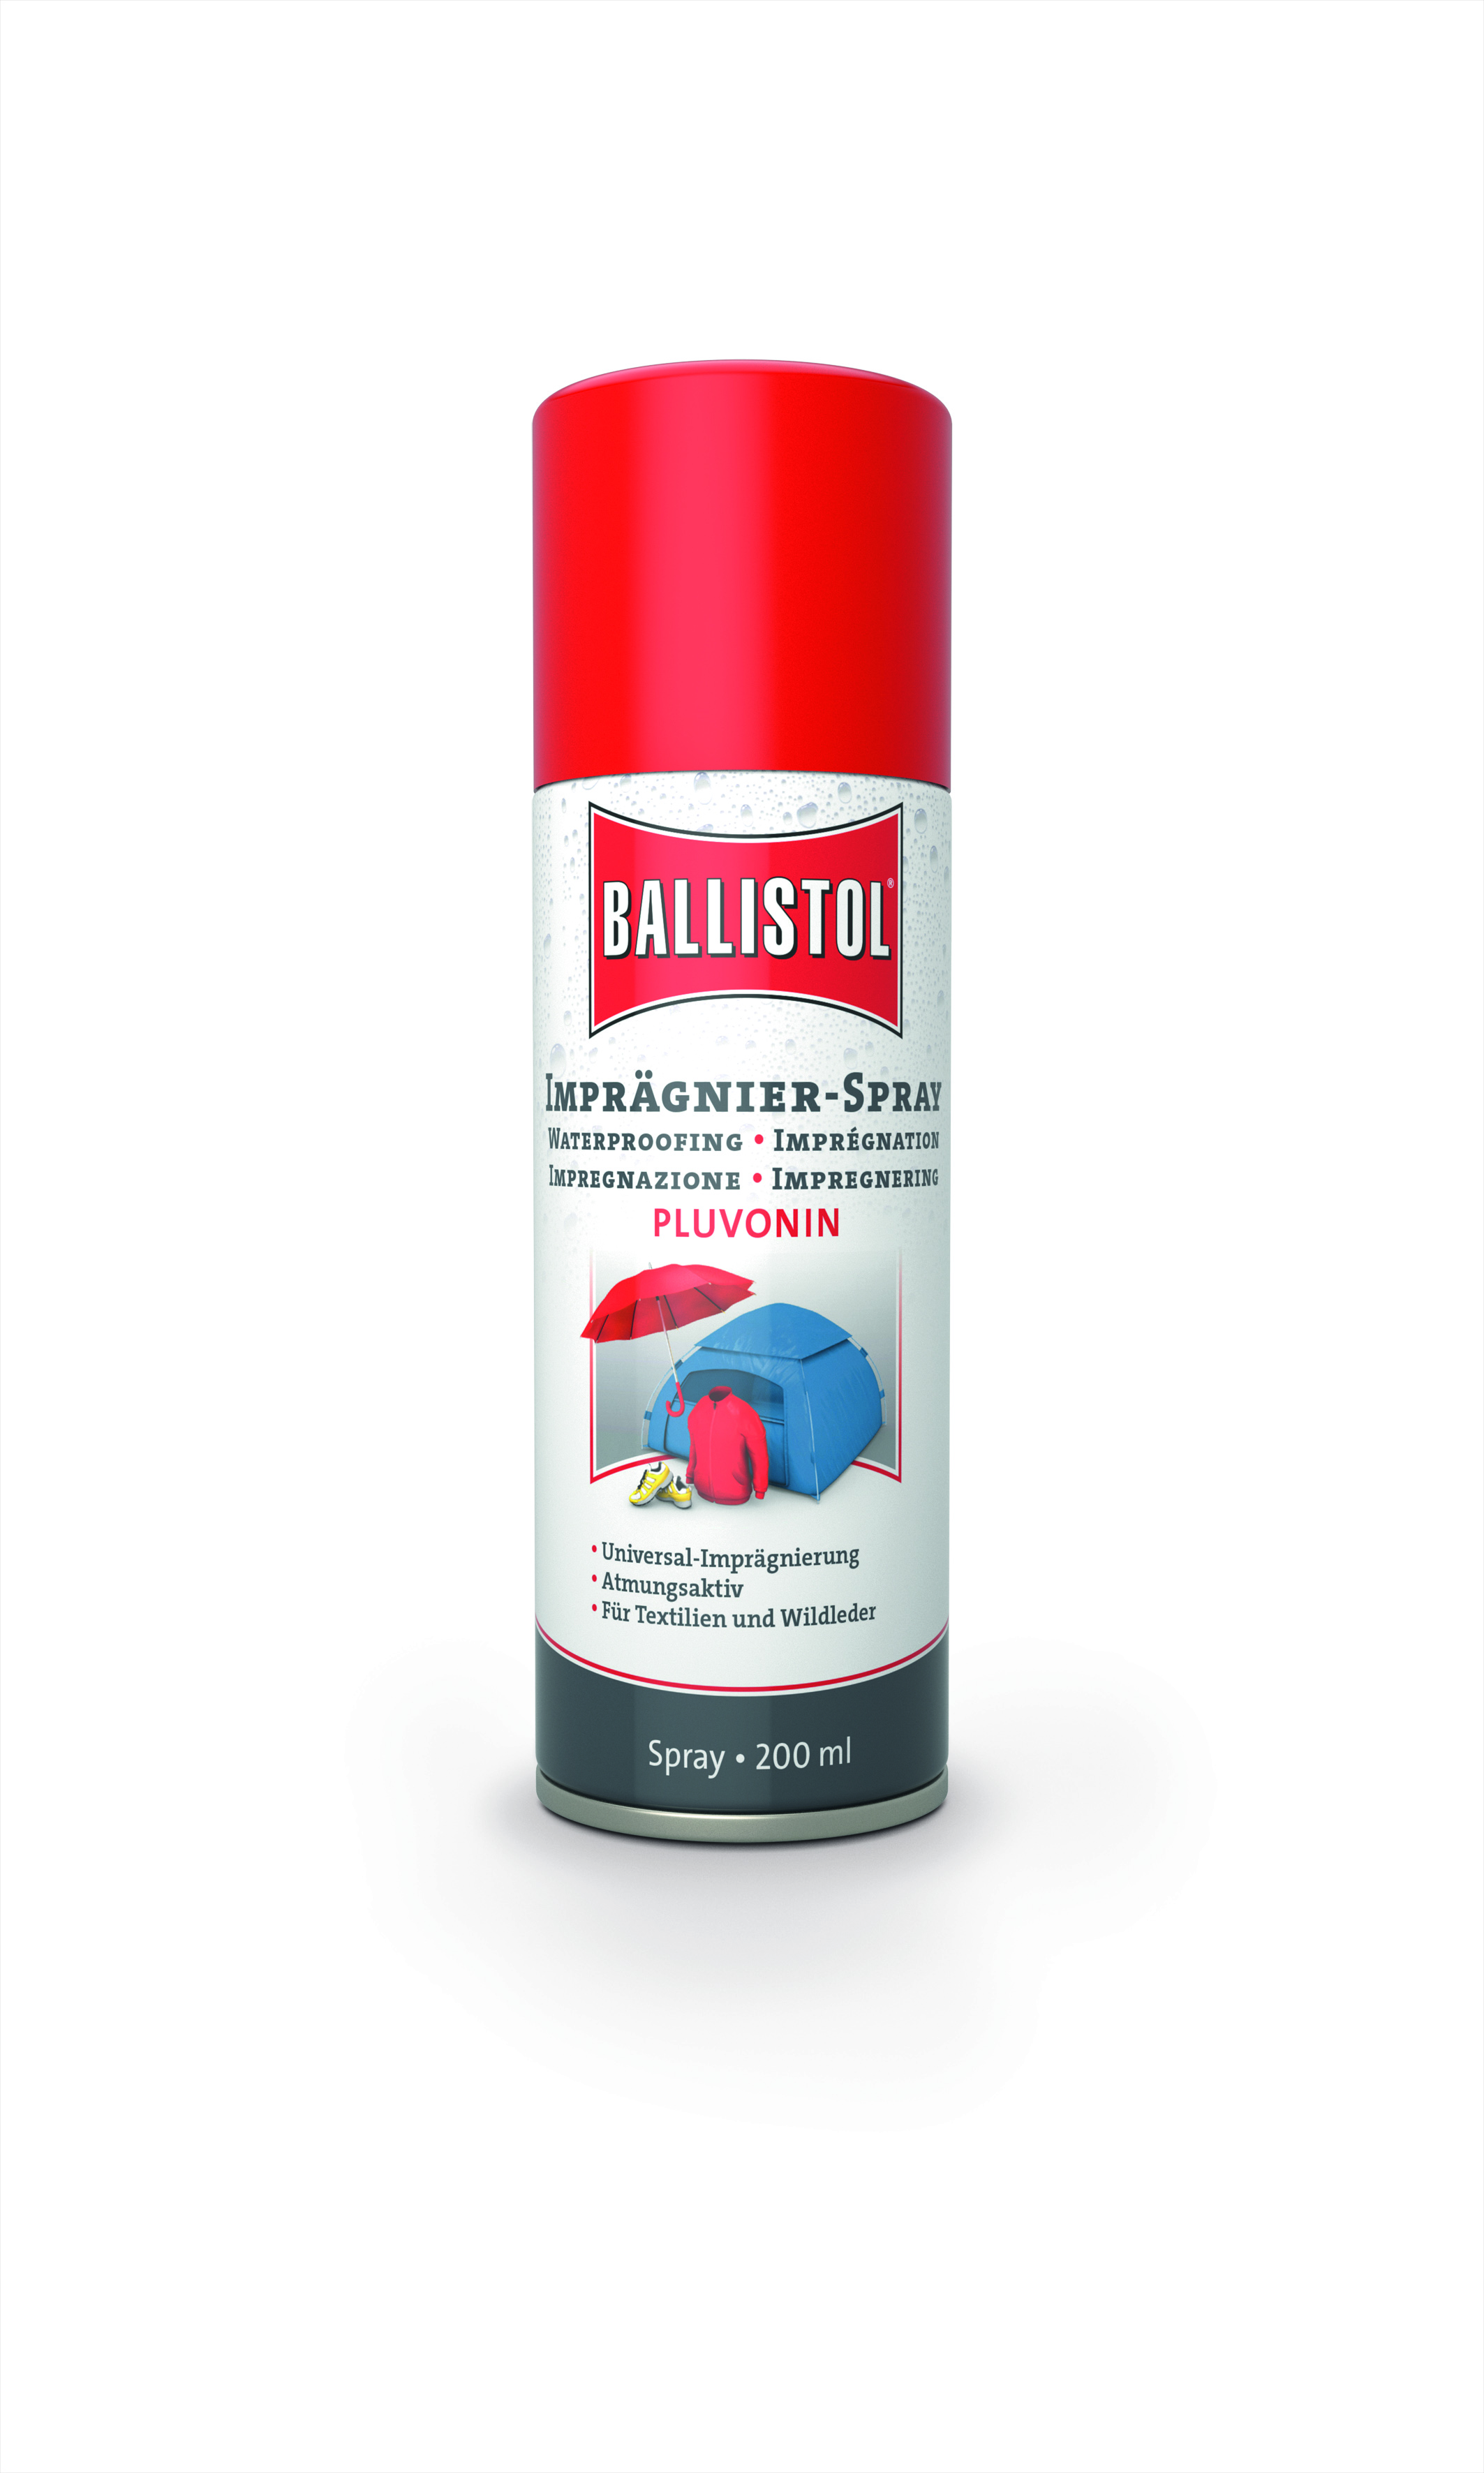 Ballistol-Pluvonin Imprägnierspray, 200ml